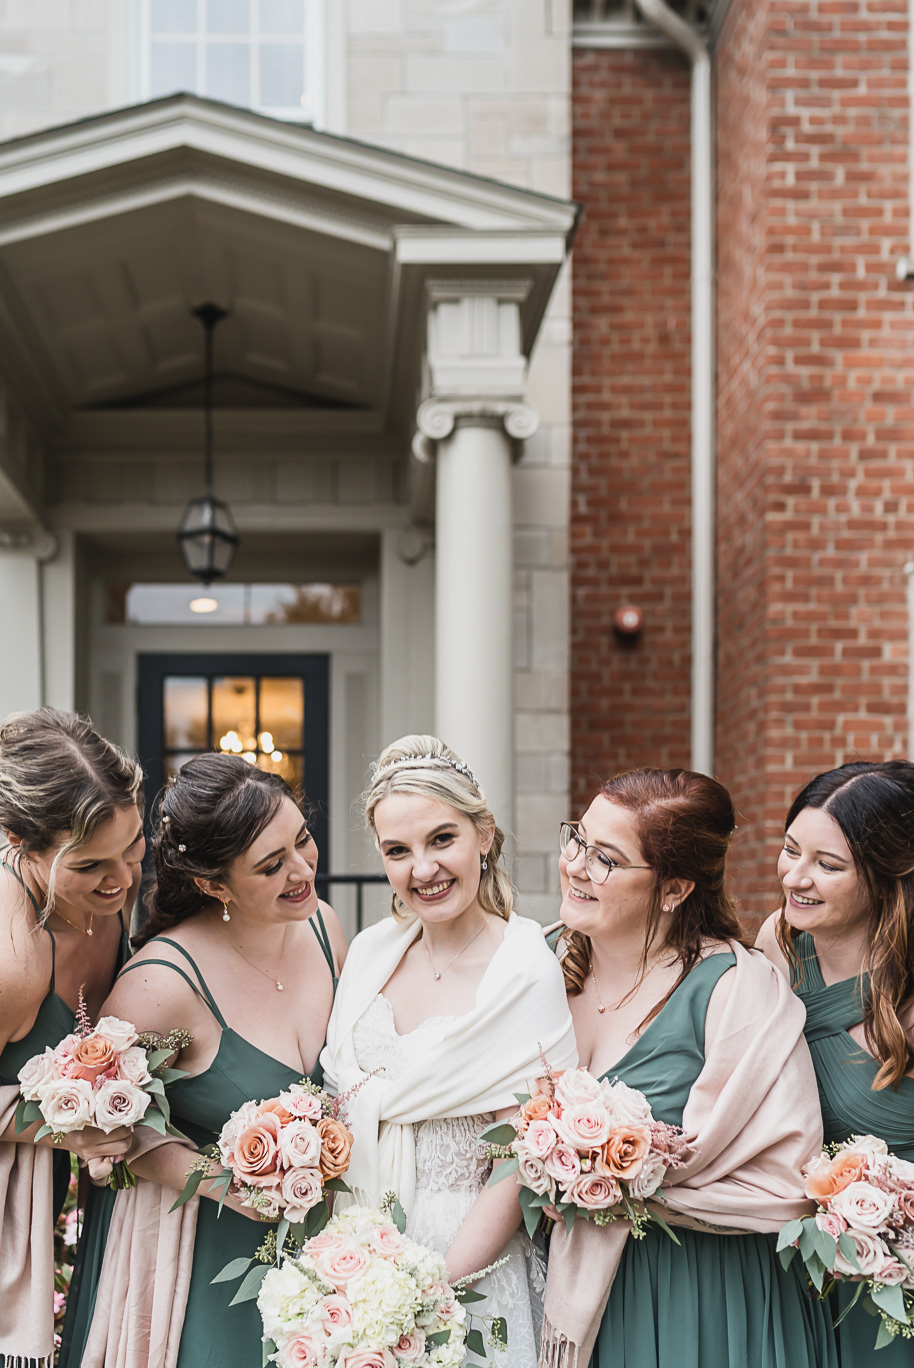 A fall Community House wedding in Birmingham, Michigan provided by Kari Dawson, top-rated Birmingham wedding photographer, and her team.